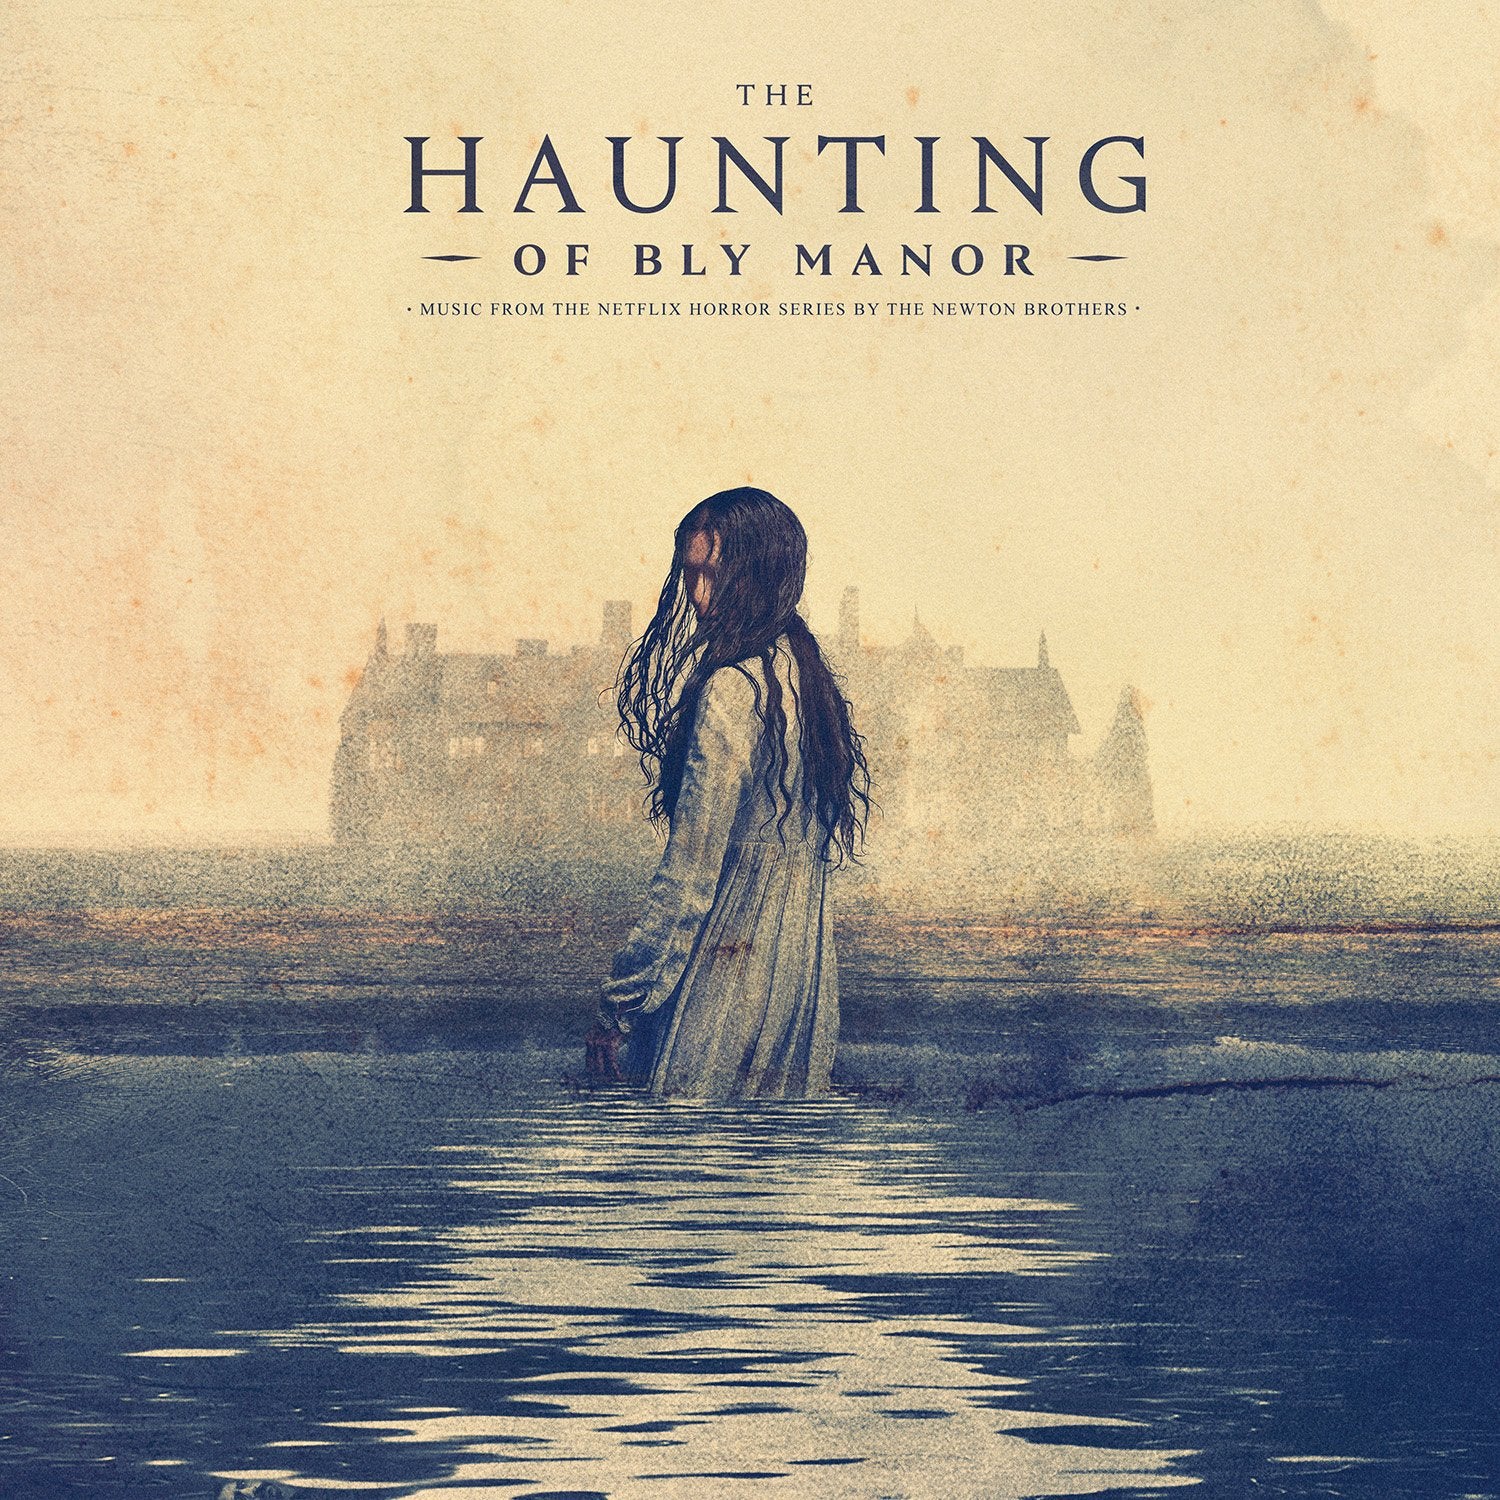 THE HAUNTING OF BLY MANOR: Original Soundtrack Vinyl LP